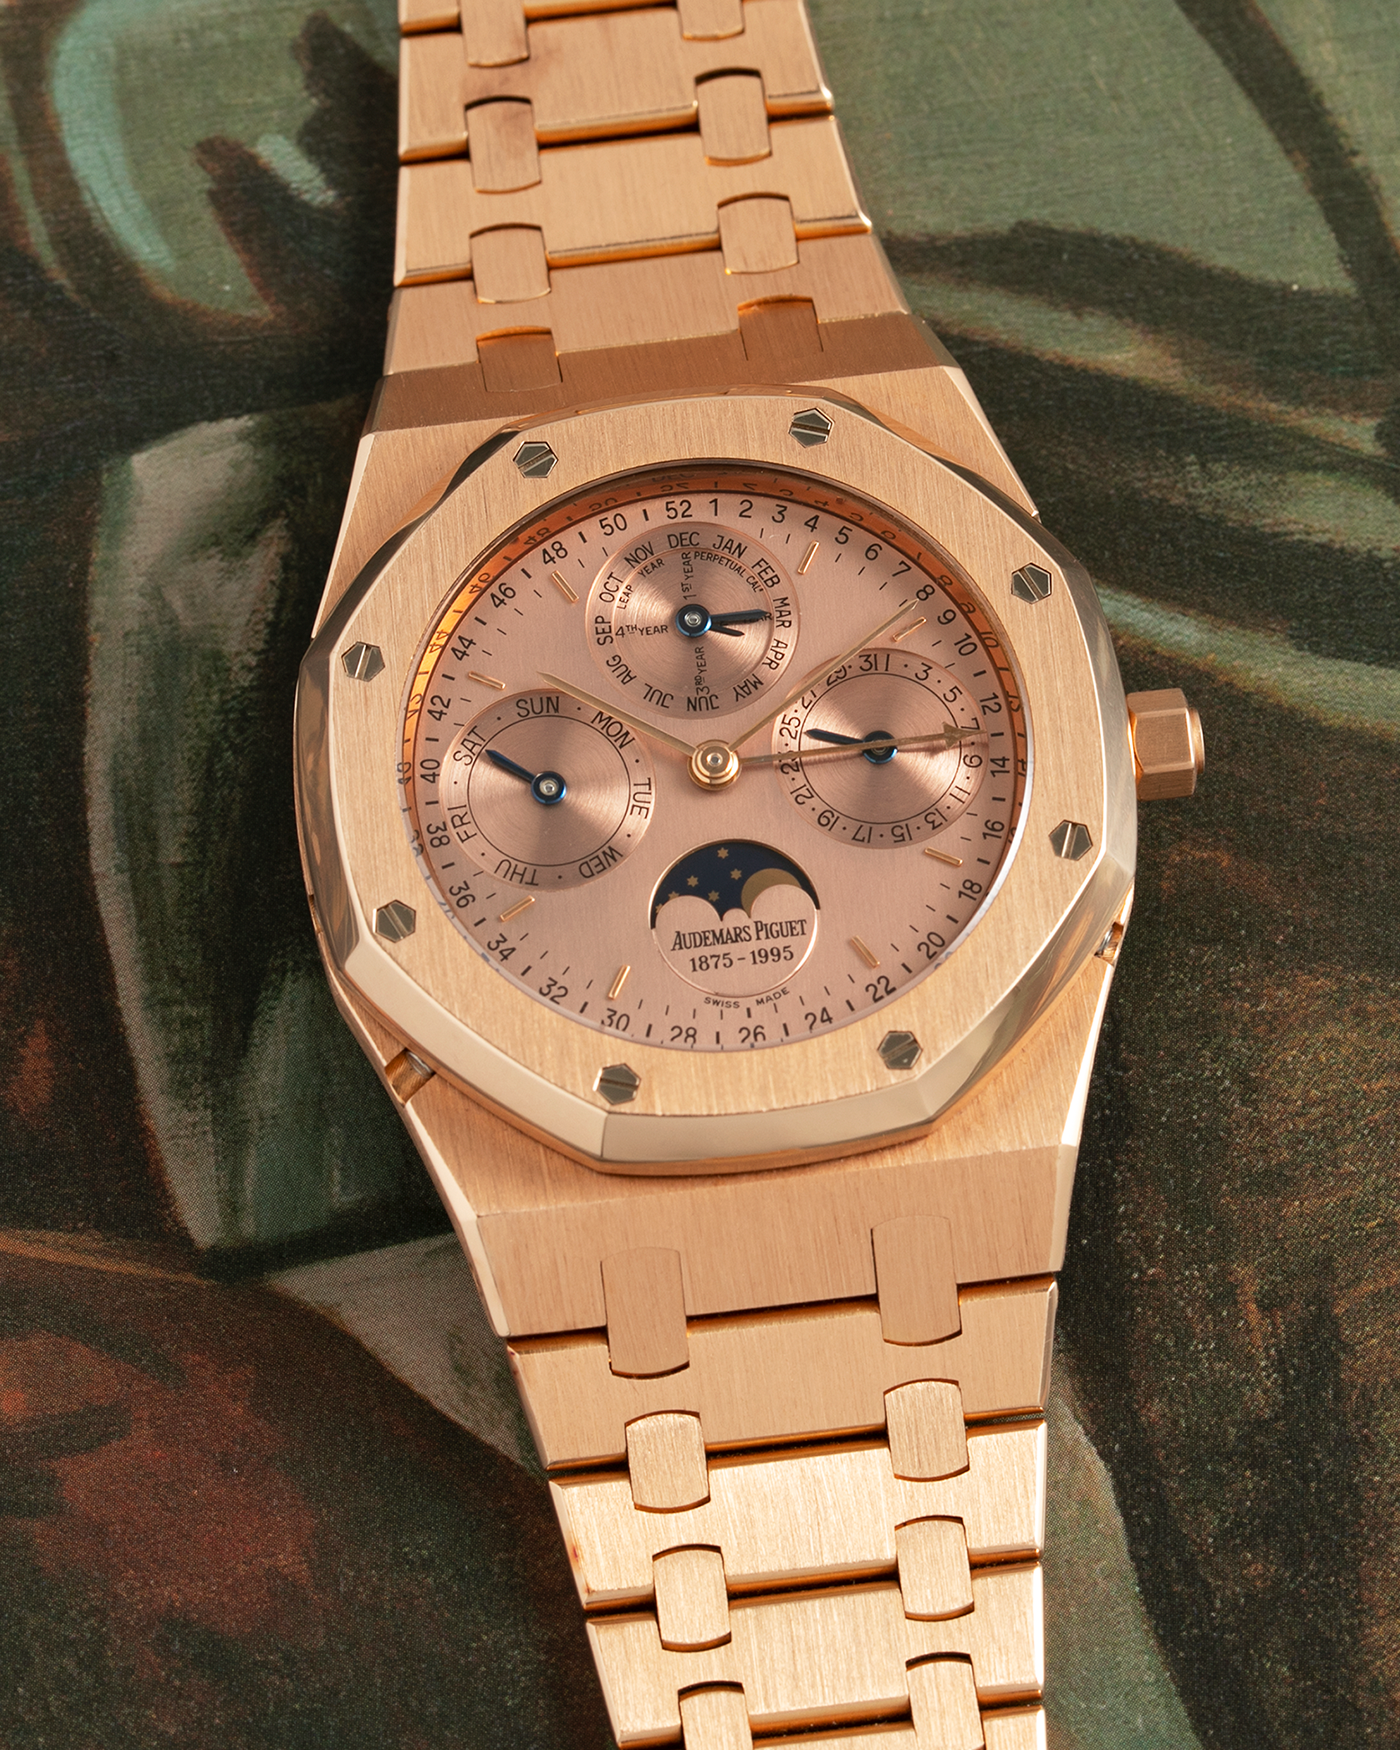 Brand: Audemars Piguet Year: 1995 Model: Royal Oak Reference Number: 25810 Material: 18k Rose Gold Movement: Cal. 2120/2802 Case Diameter: 39mm Bracelet: 18k Rose Gold Audemars Piguet Integrated Bracelet